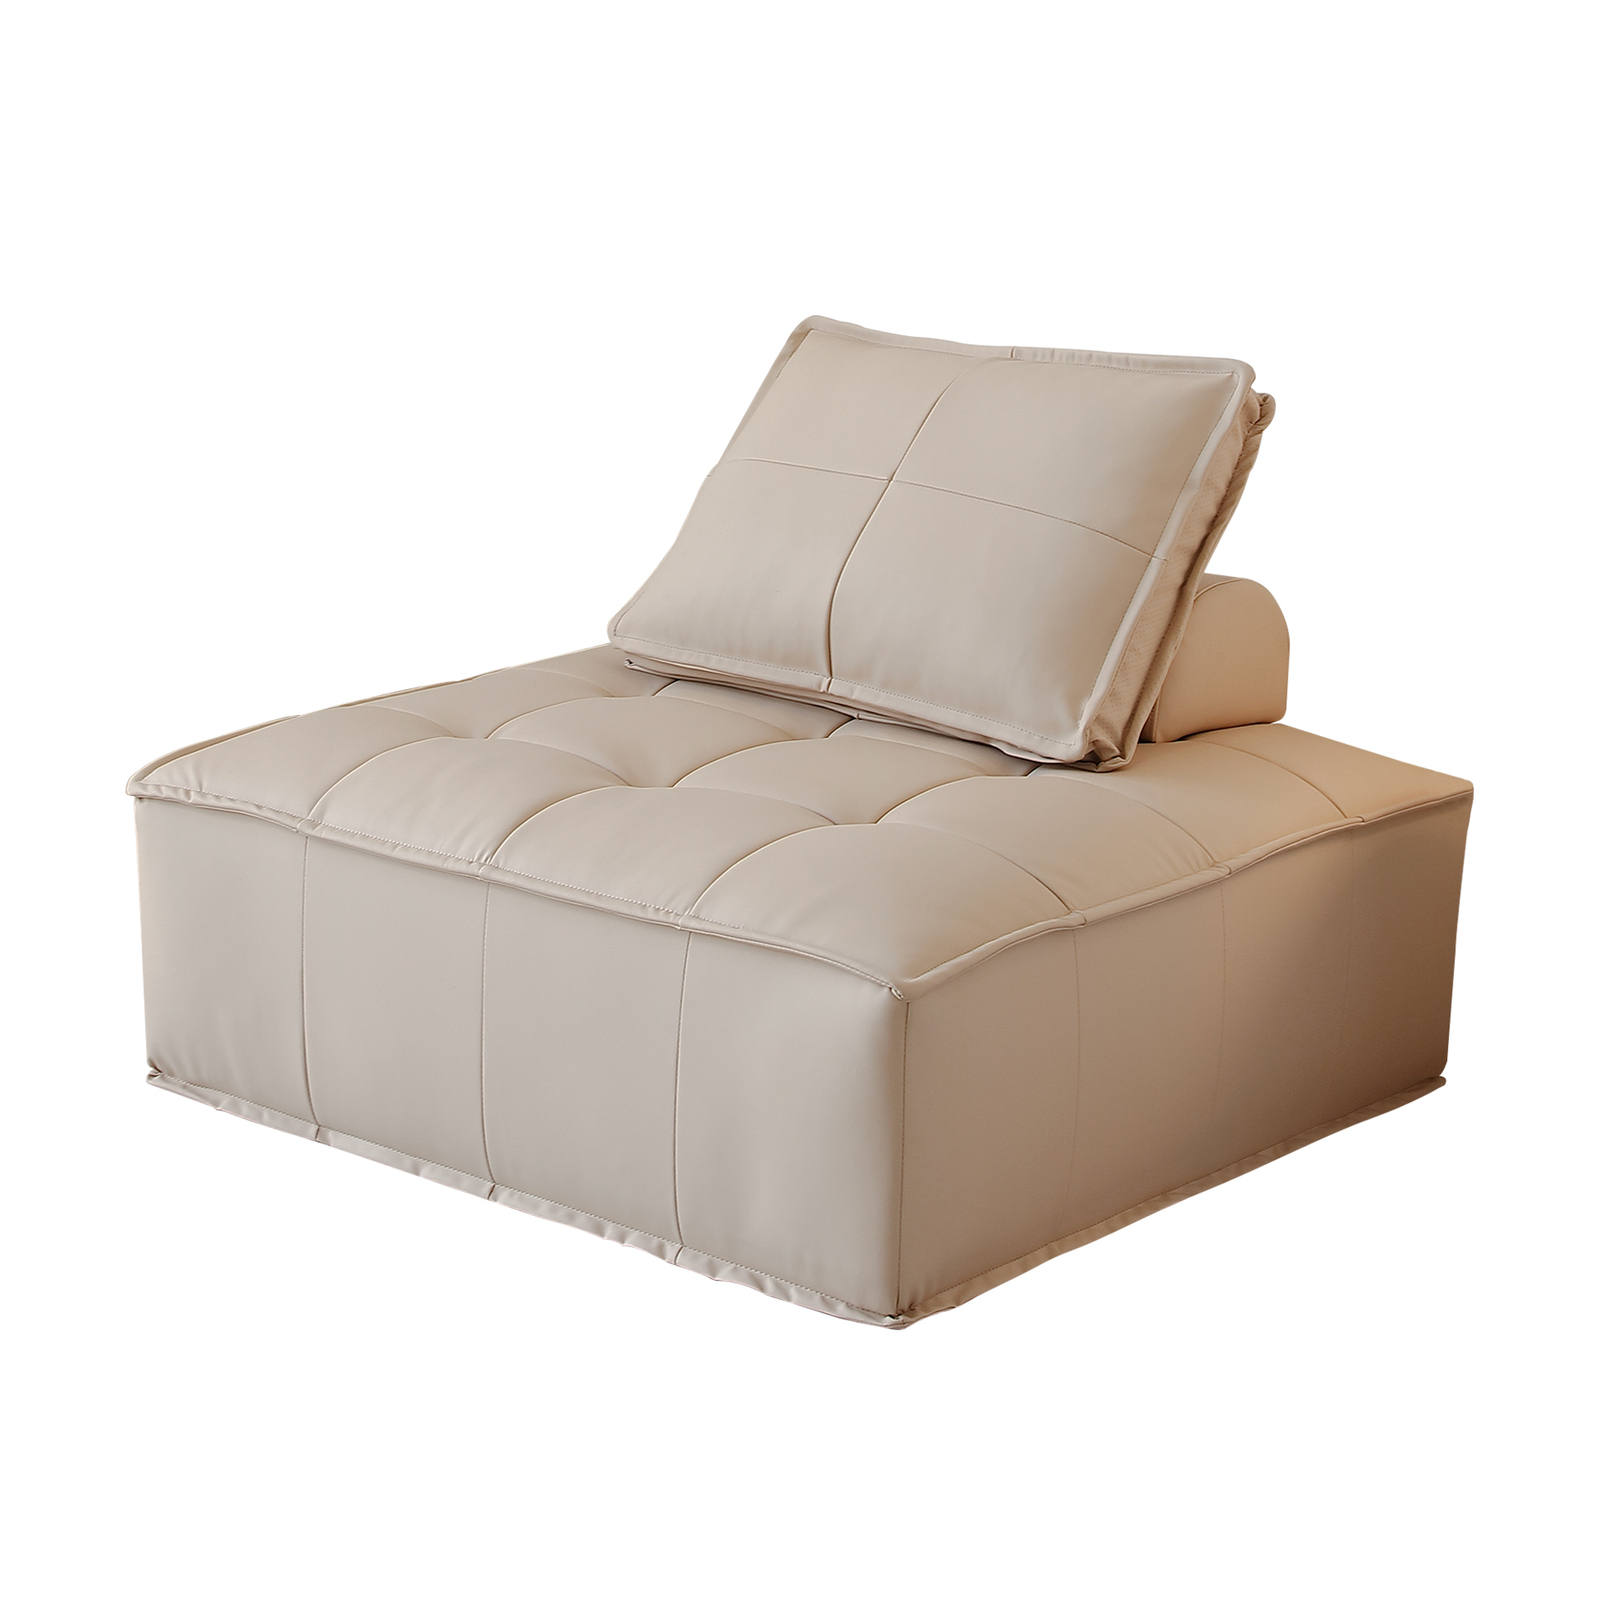 1pc Large Modular Sofa Lounge Chair Tofu Sofa Armless Seat PU Leather Couch Seat - Beige